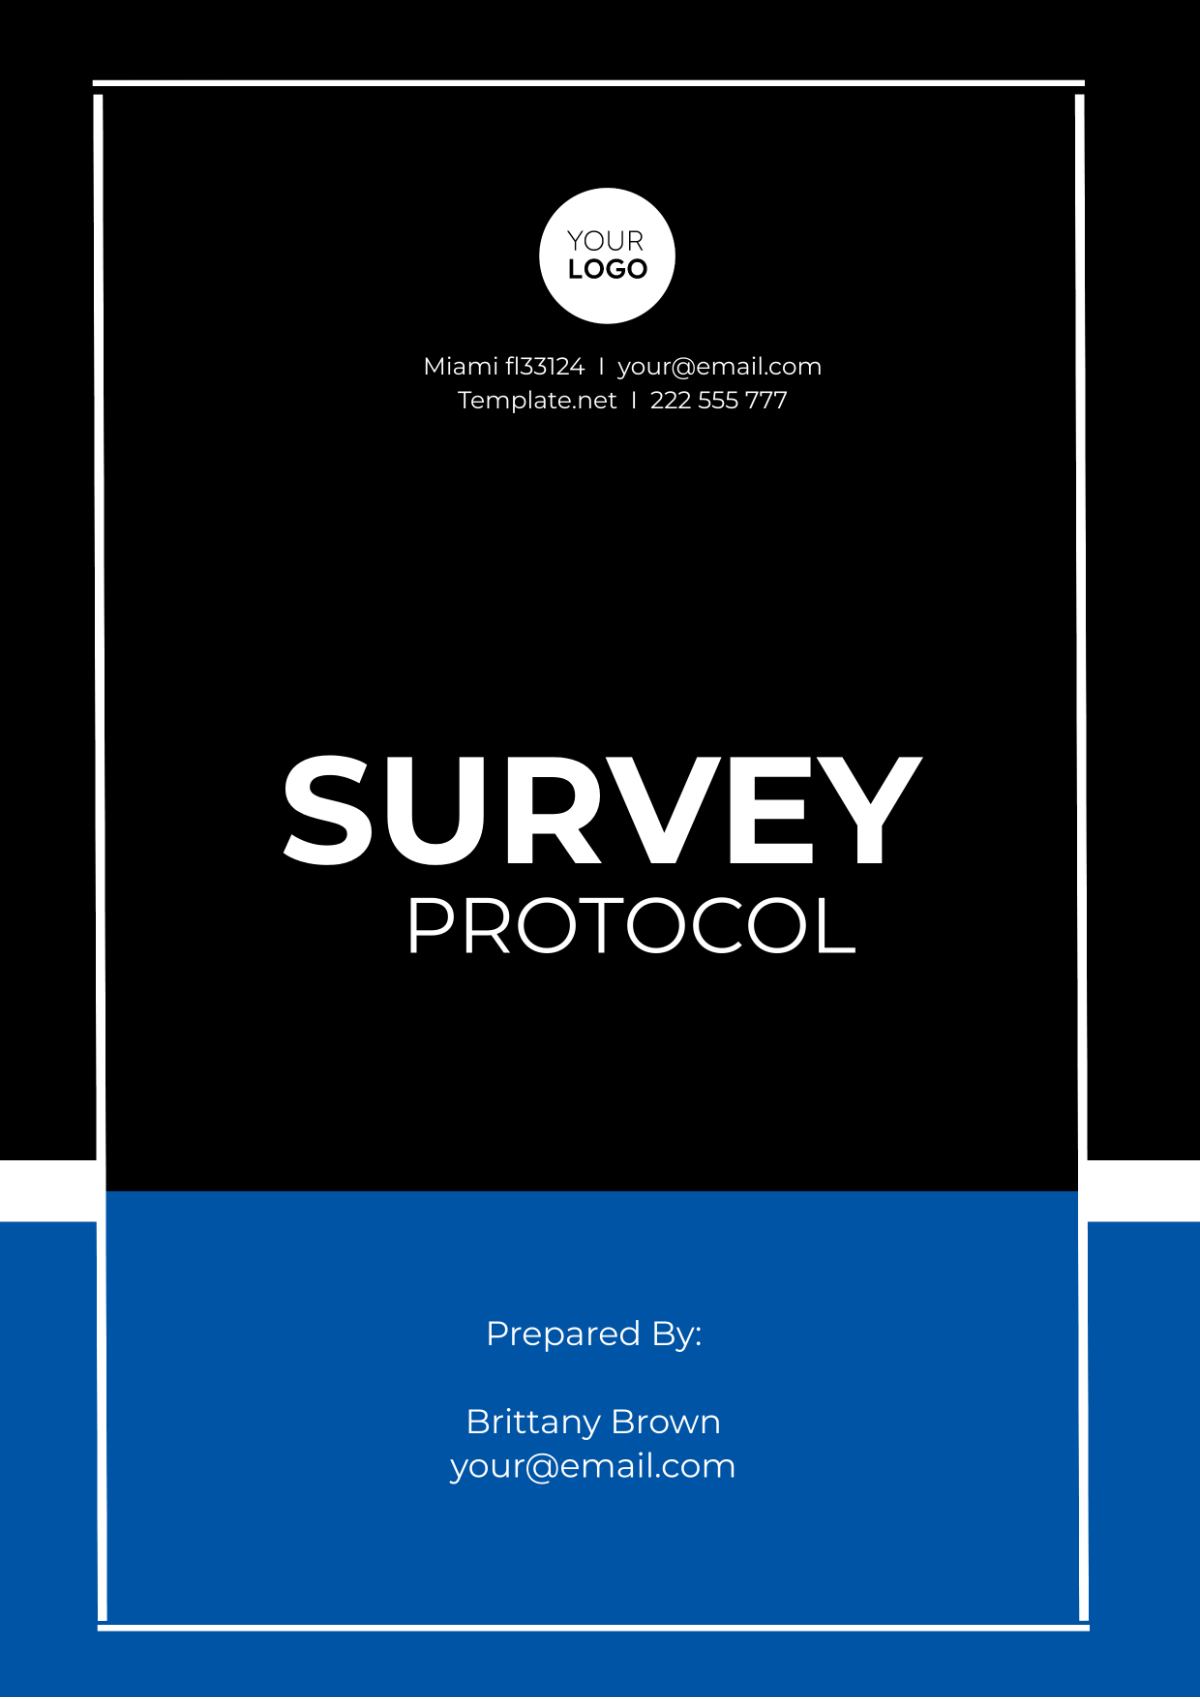 Survey Protocol Template